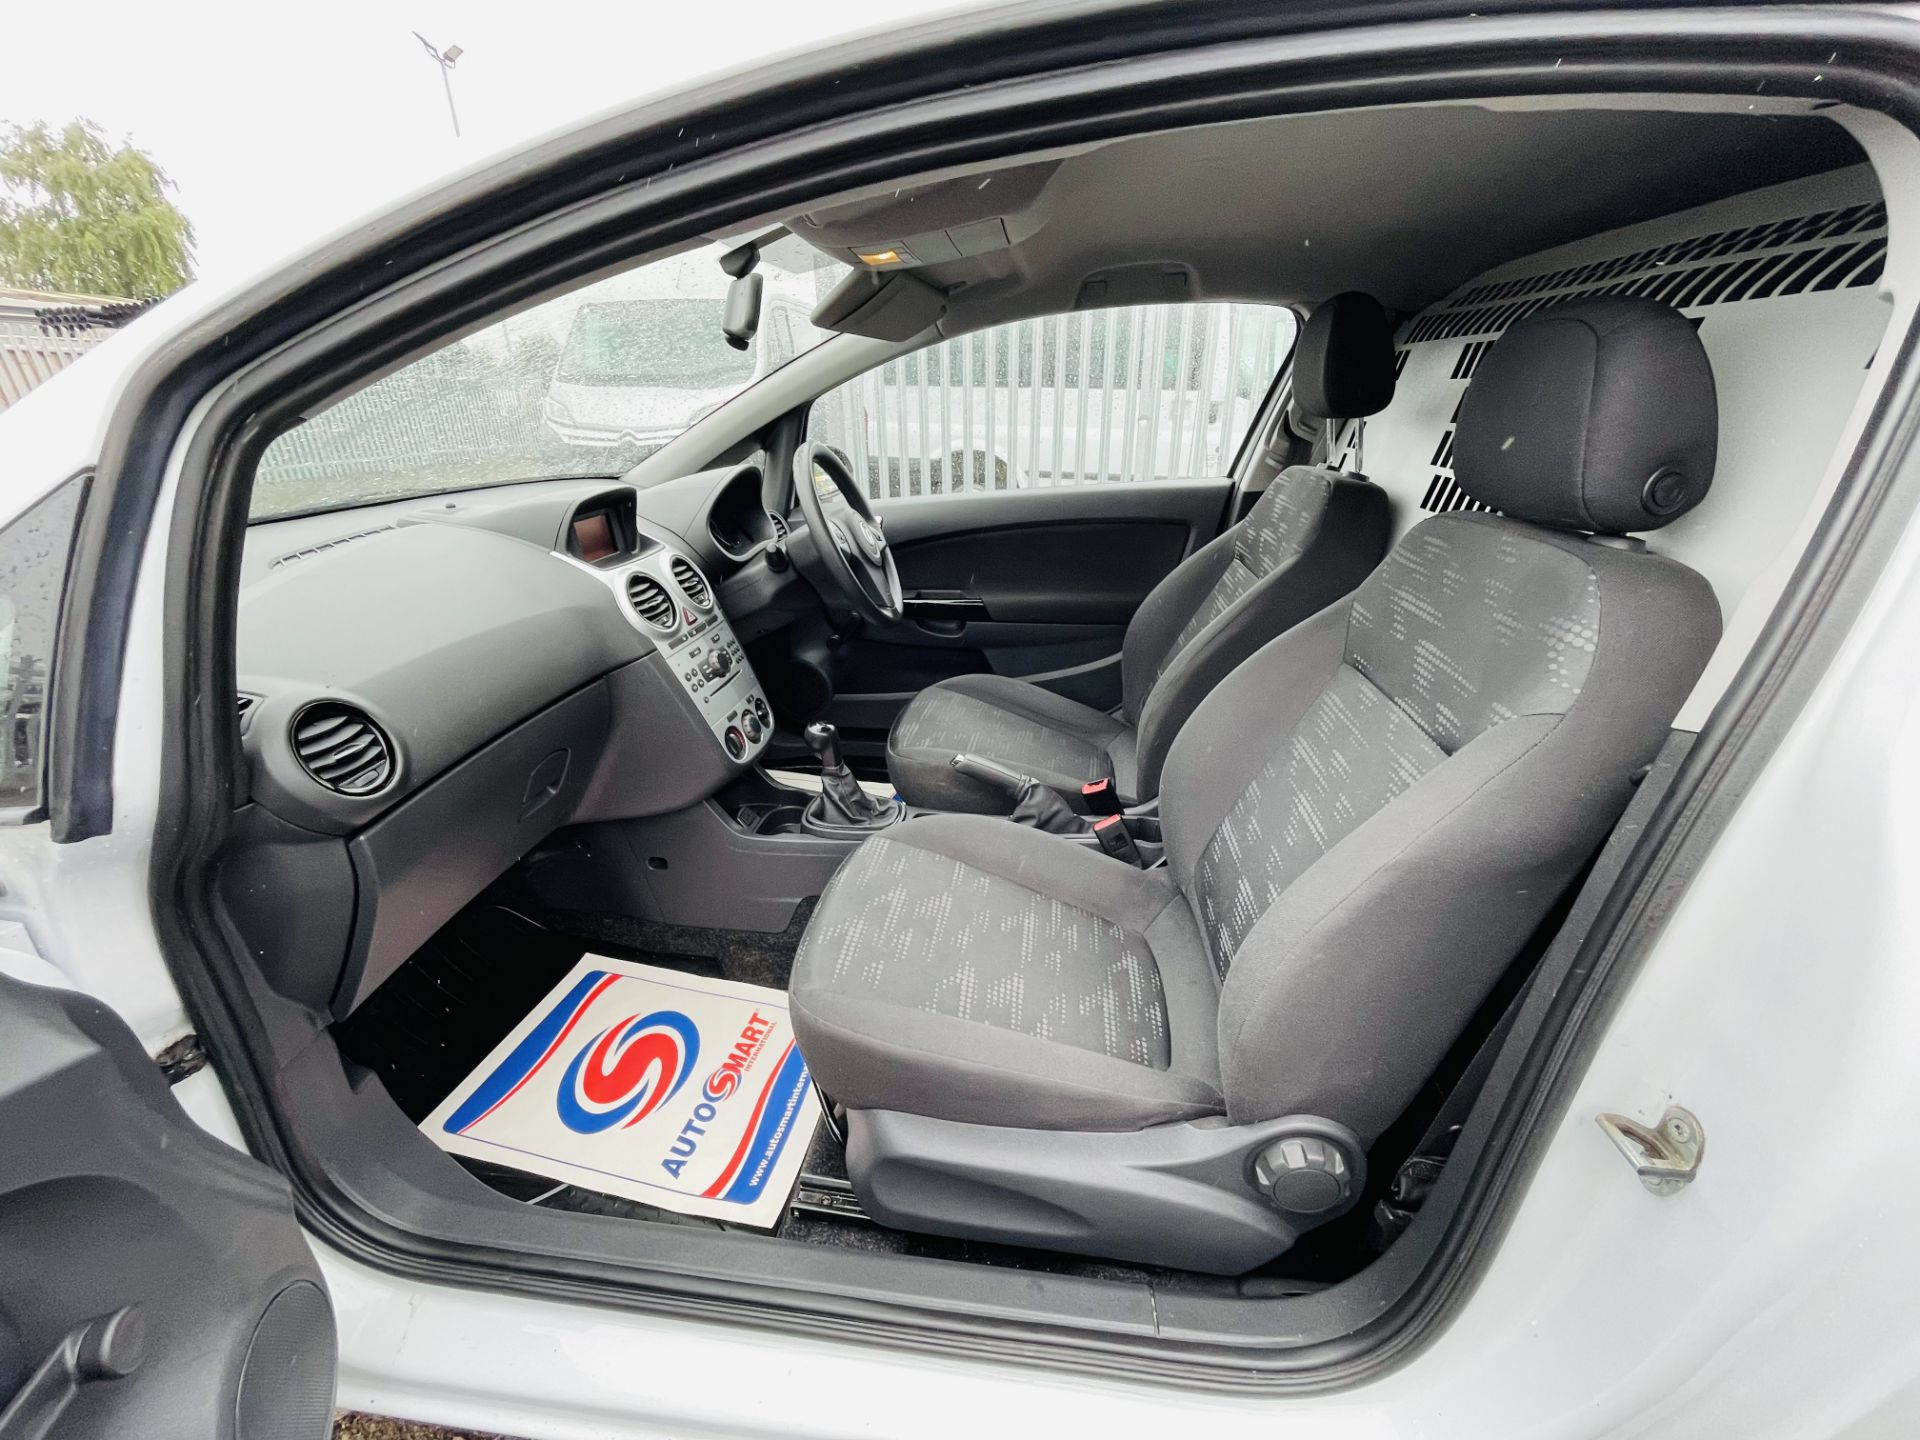 Vauxhall Corsa 1.2 CDTI Eco-Flex 2015 '15 Reg' - LCV - No Vat Save 20% - Image 6 of 17